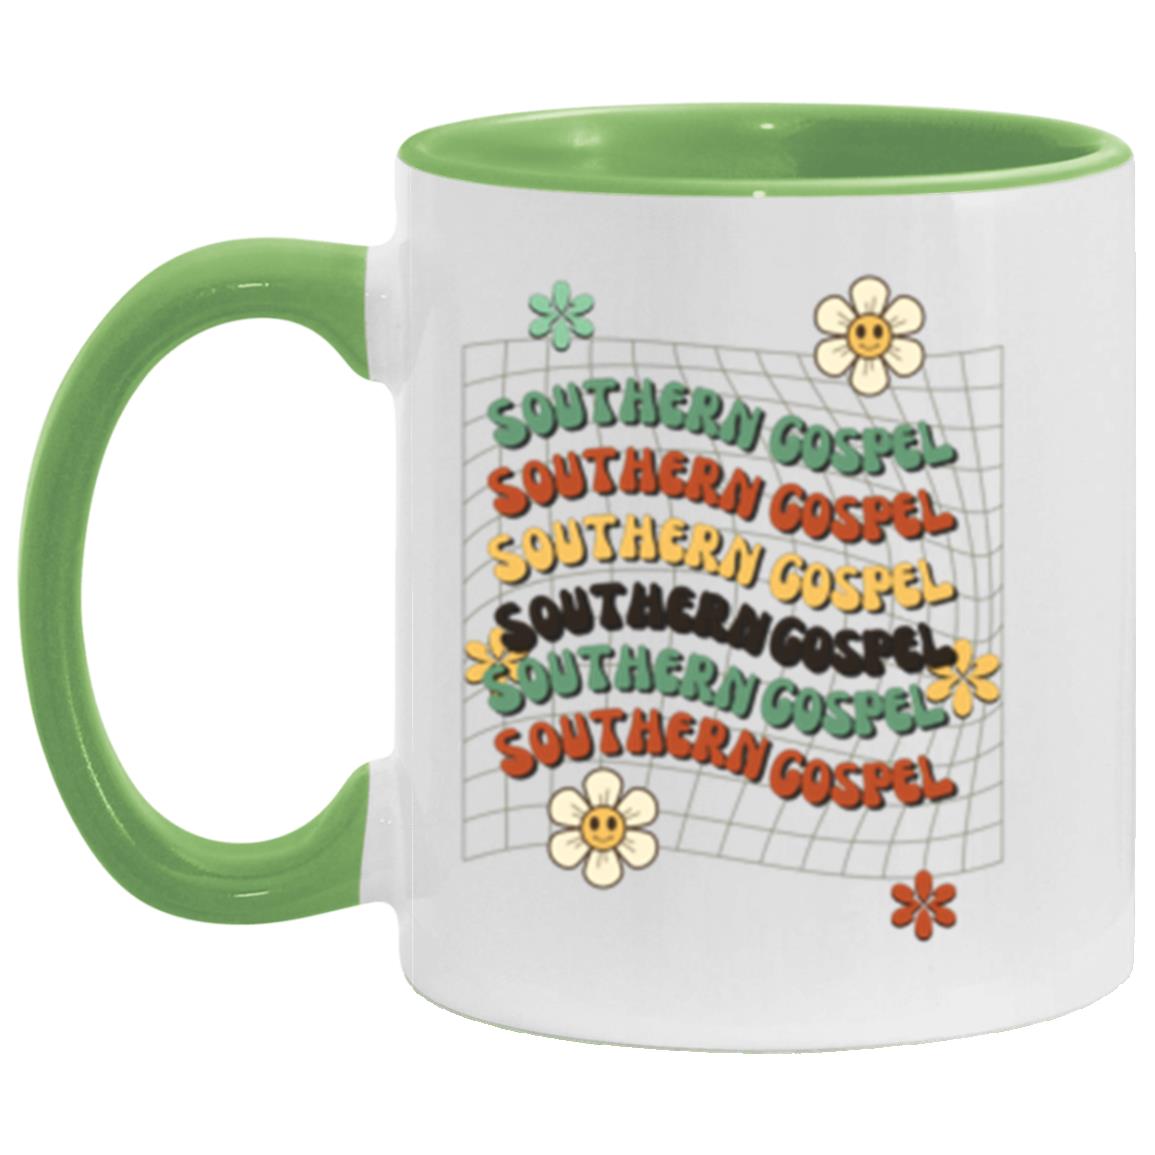 Southern Gospel - Southern Gospel Coffee mug